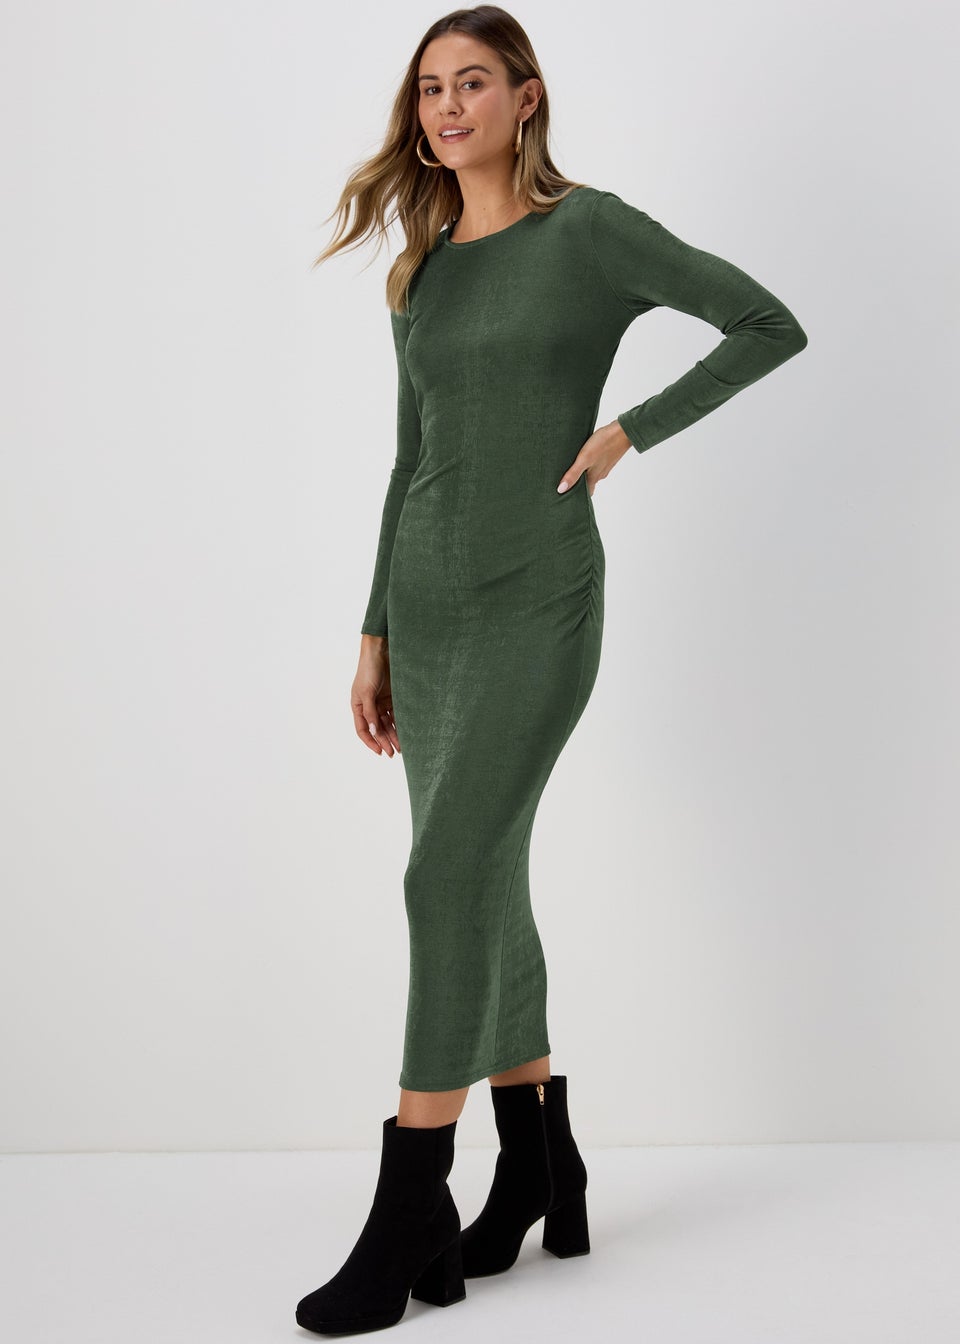 Green Ruched Side Dress - Matalan